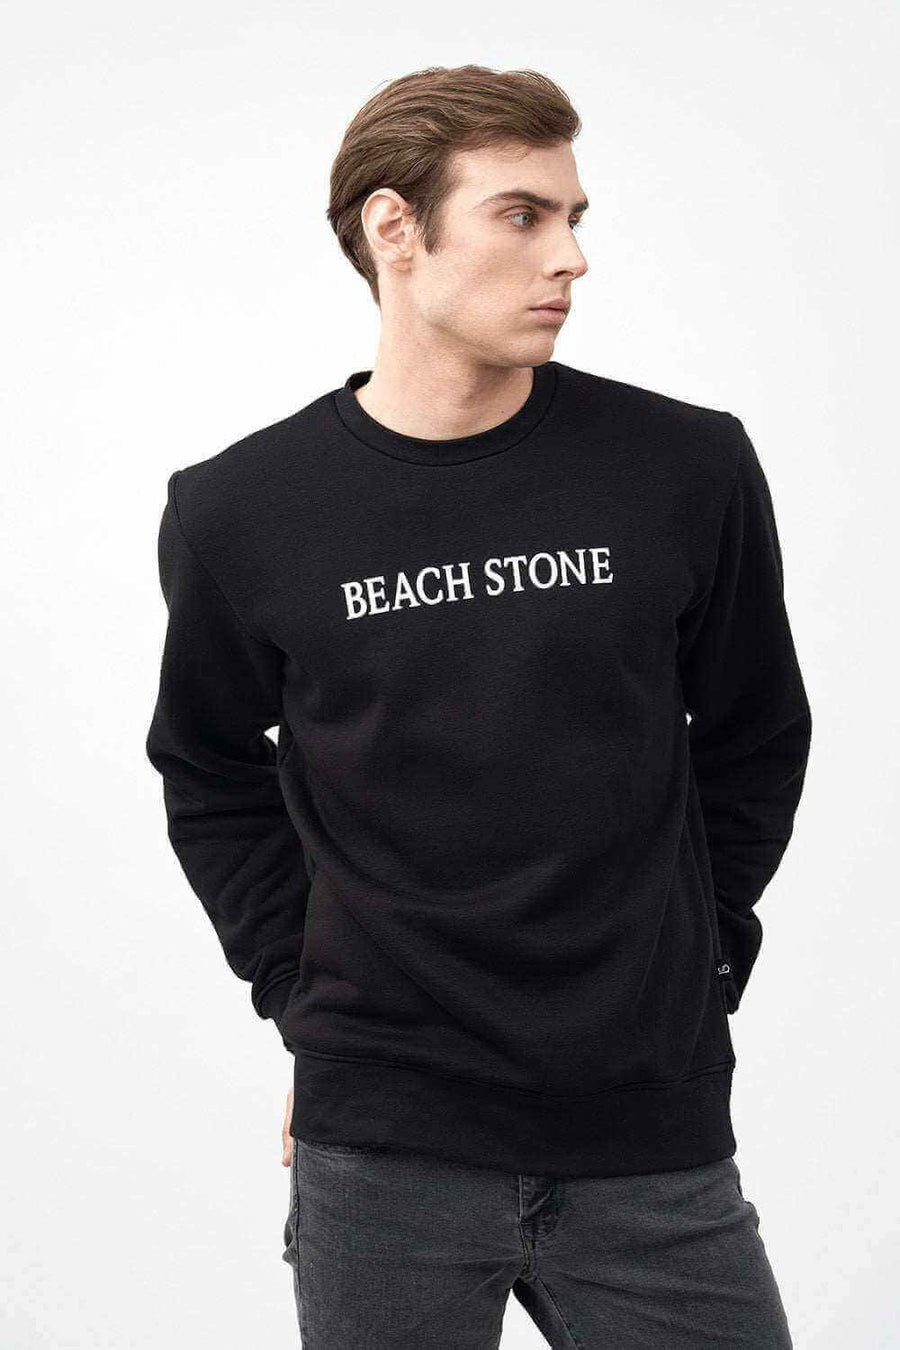 Front View of Crew Neck Men's Sweatshirt with Beach Stone Print